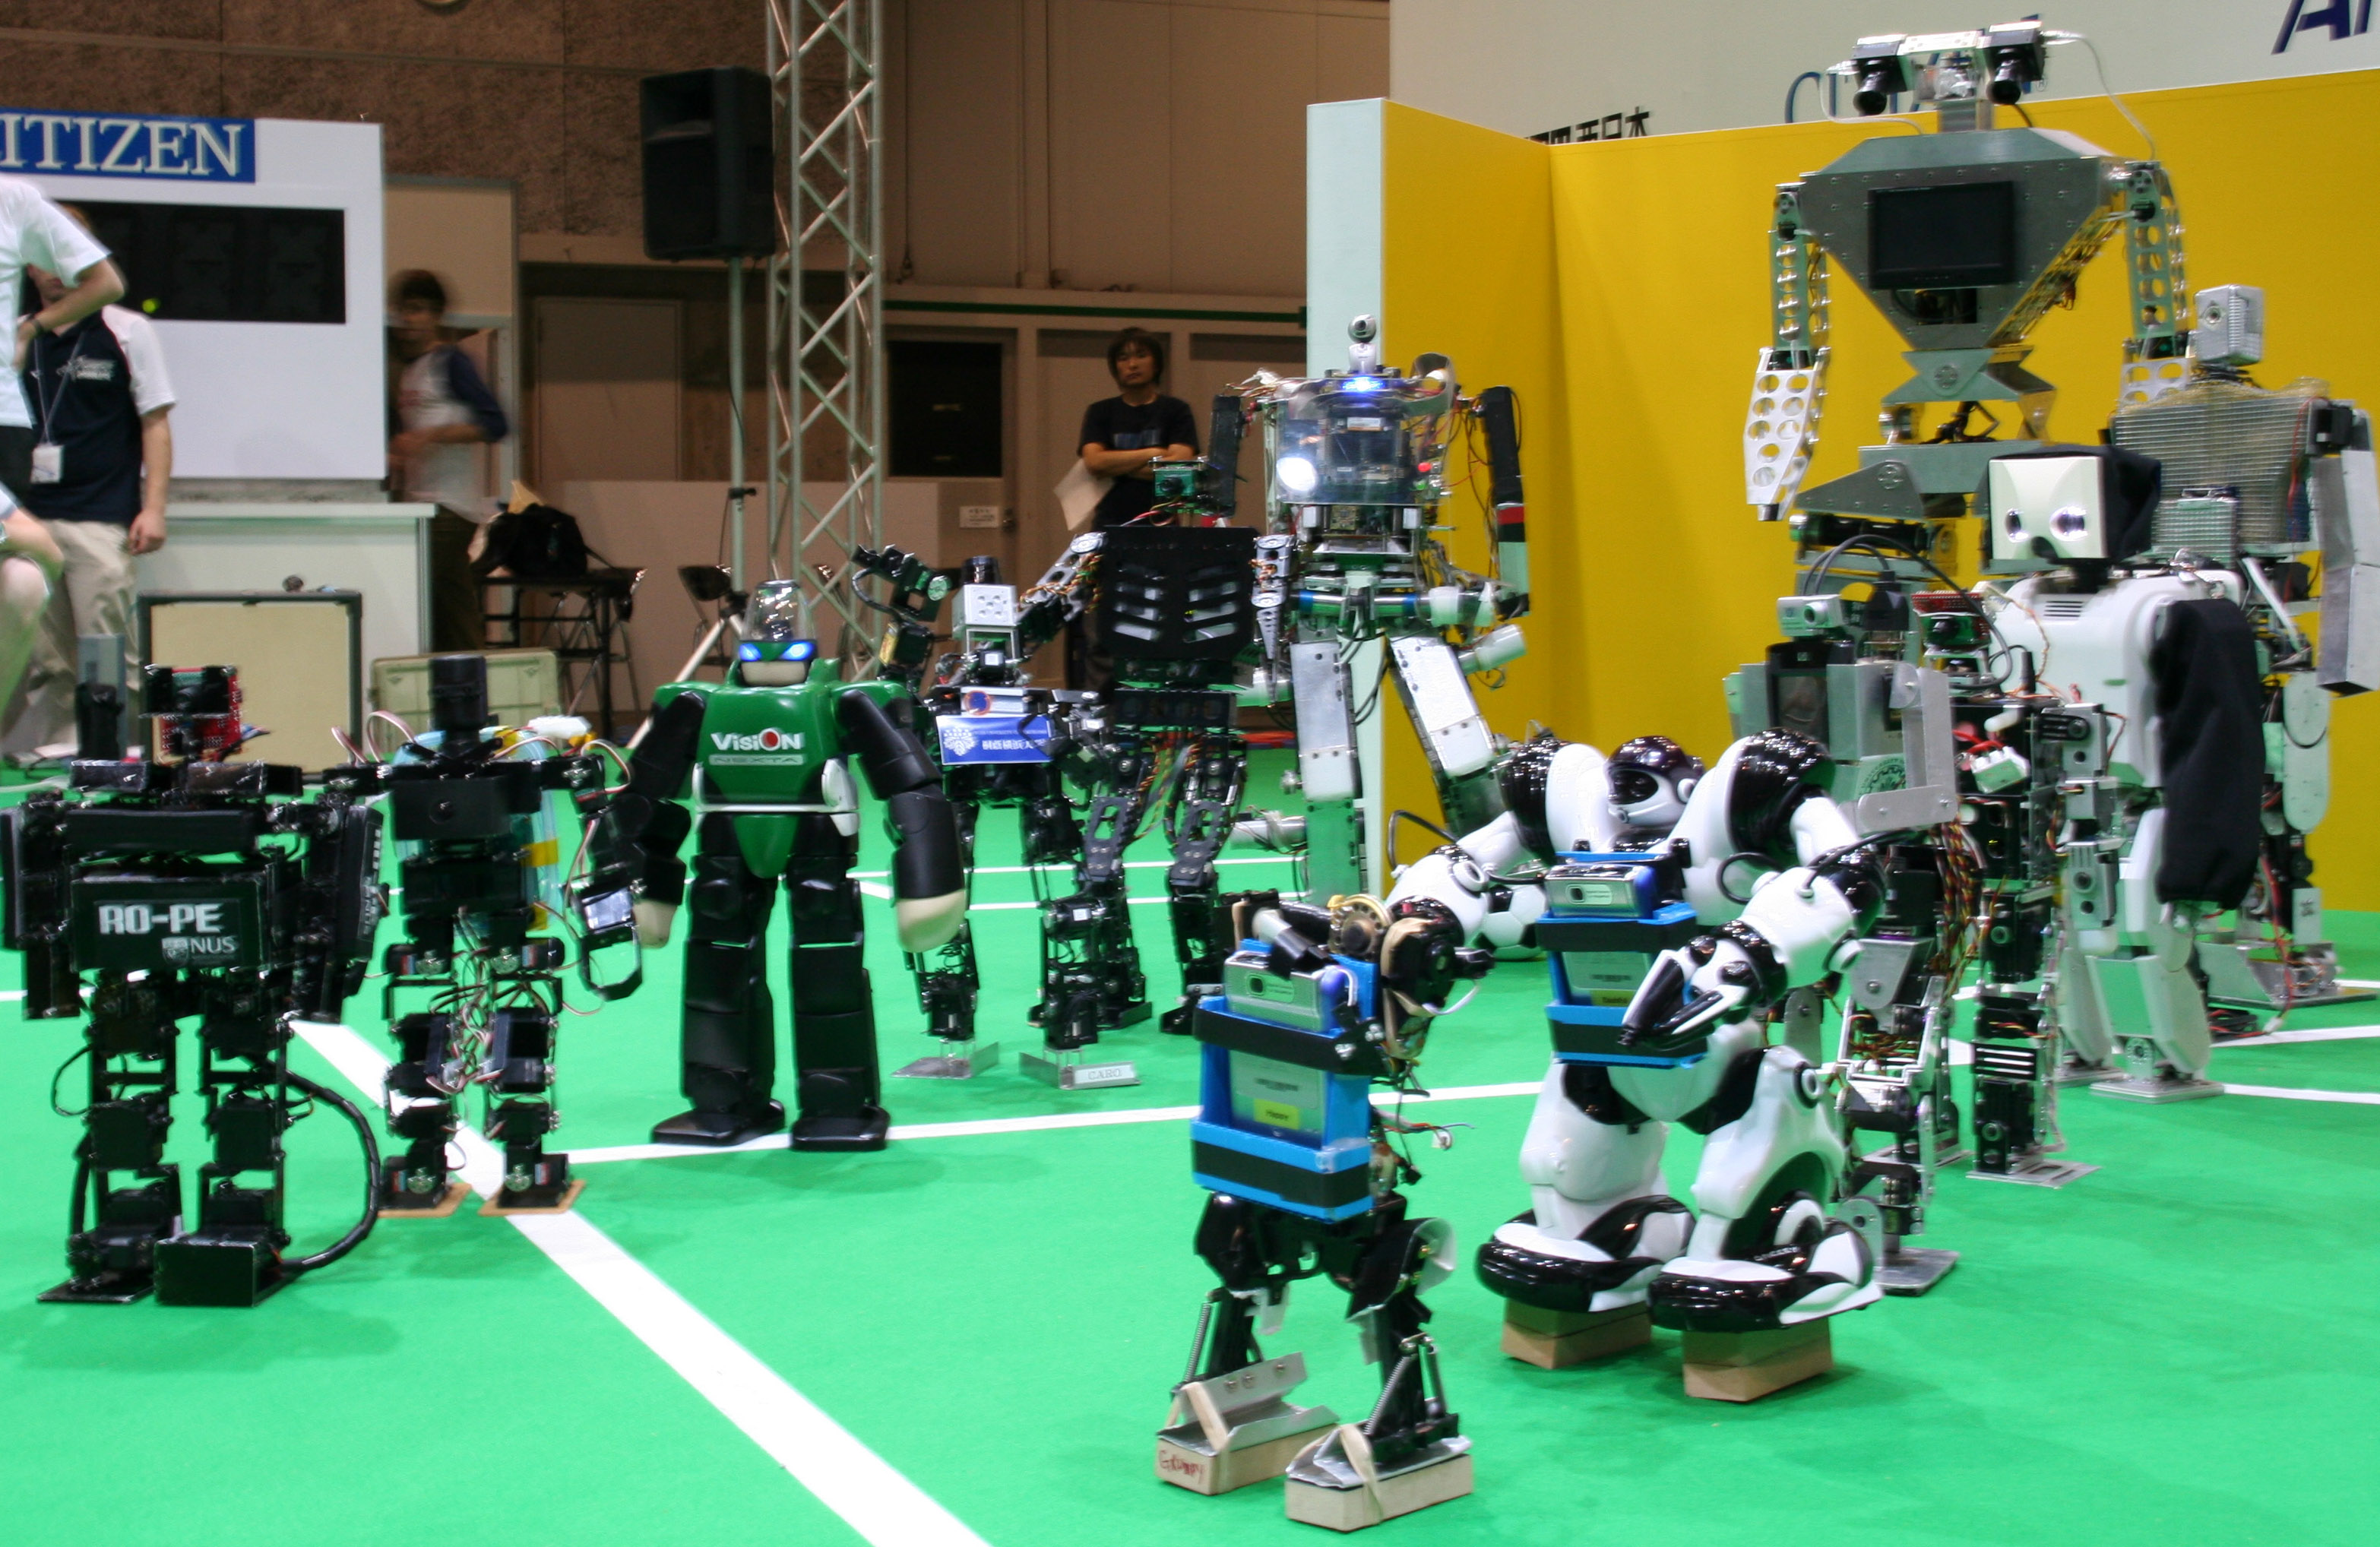 Включи команда роботов. Соревнования роботов. Соревнования по робототехнике. Учебные роботы. Робототехника для детей.